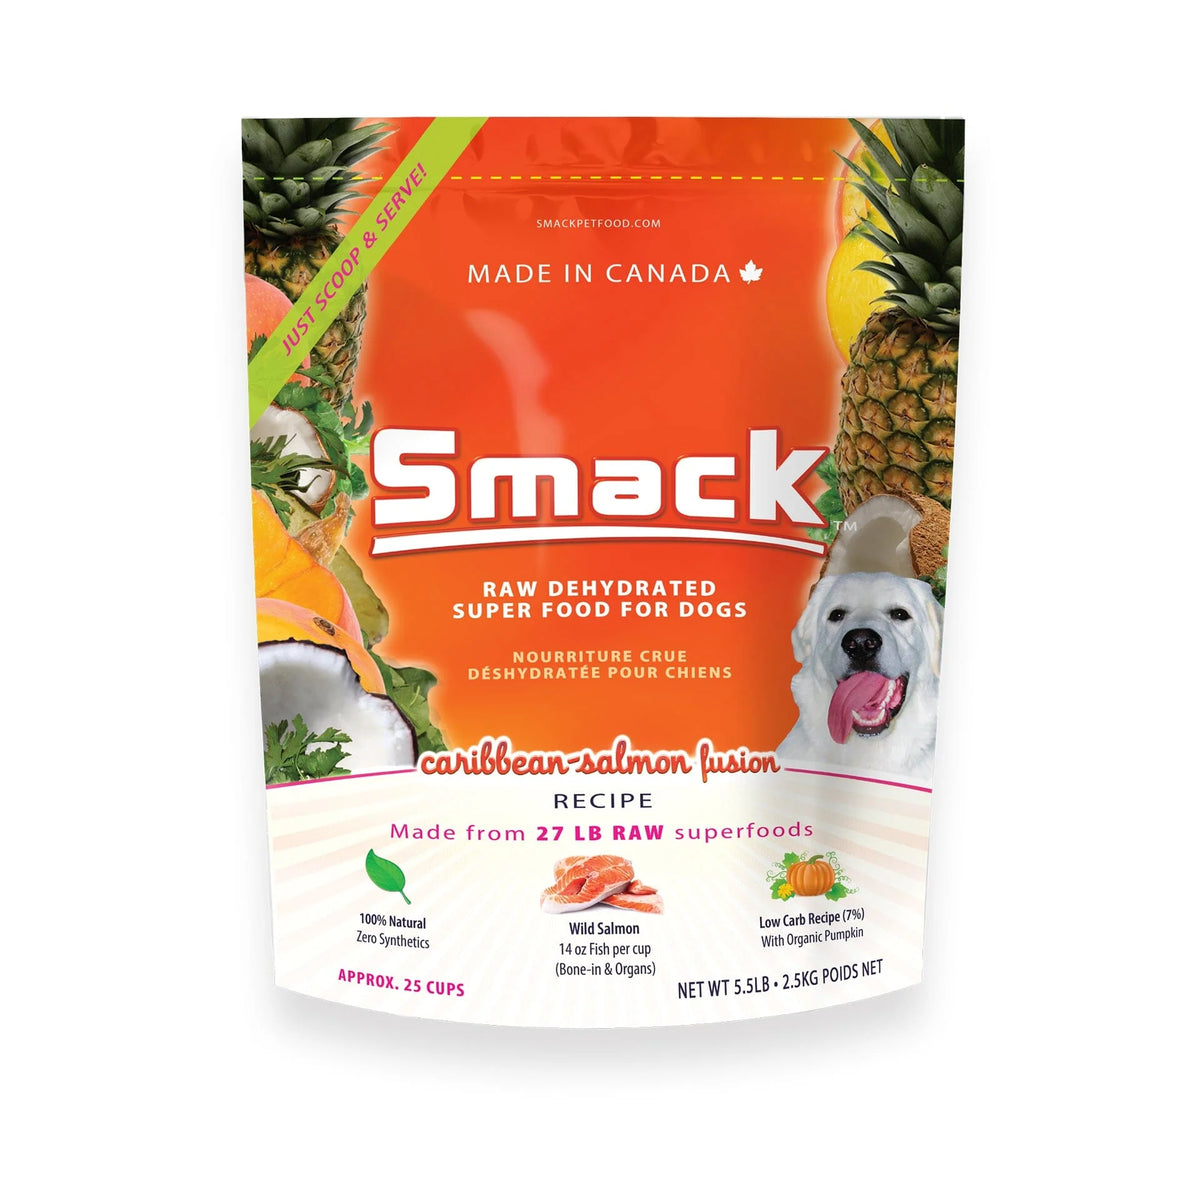 Smack: Caribbean-Salmon Fusion Dog Food